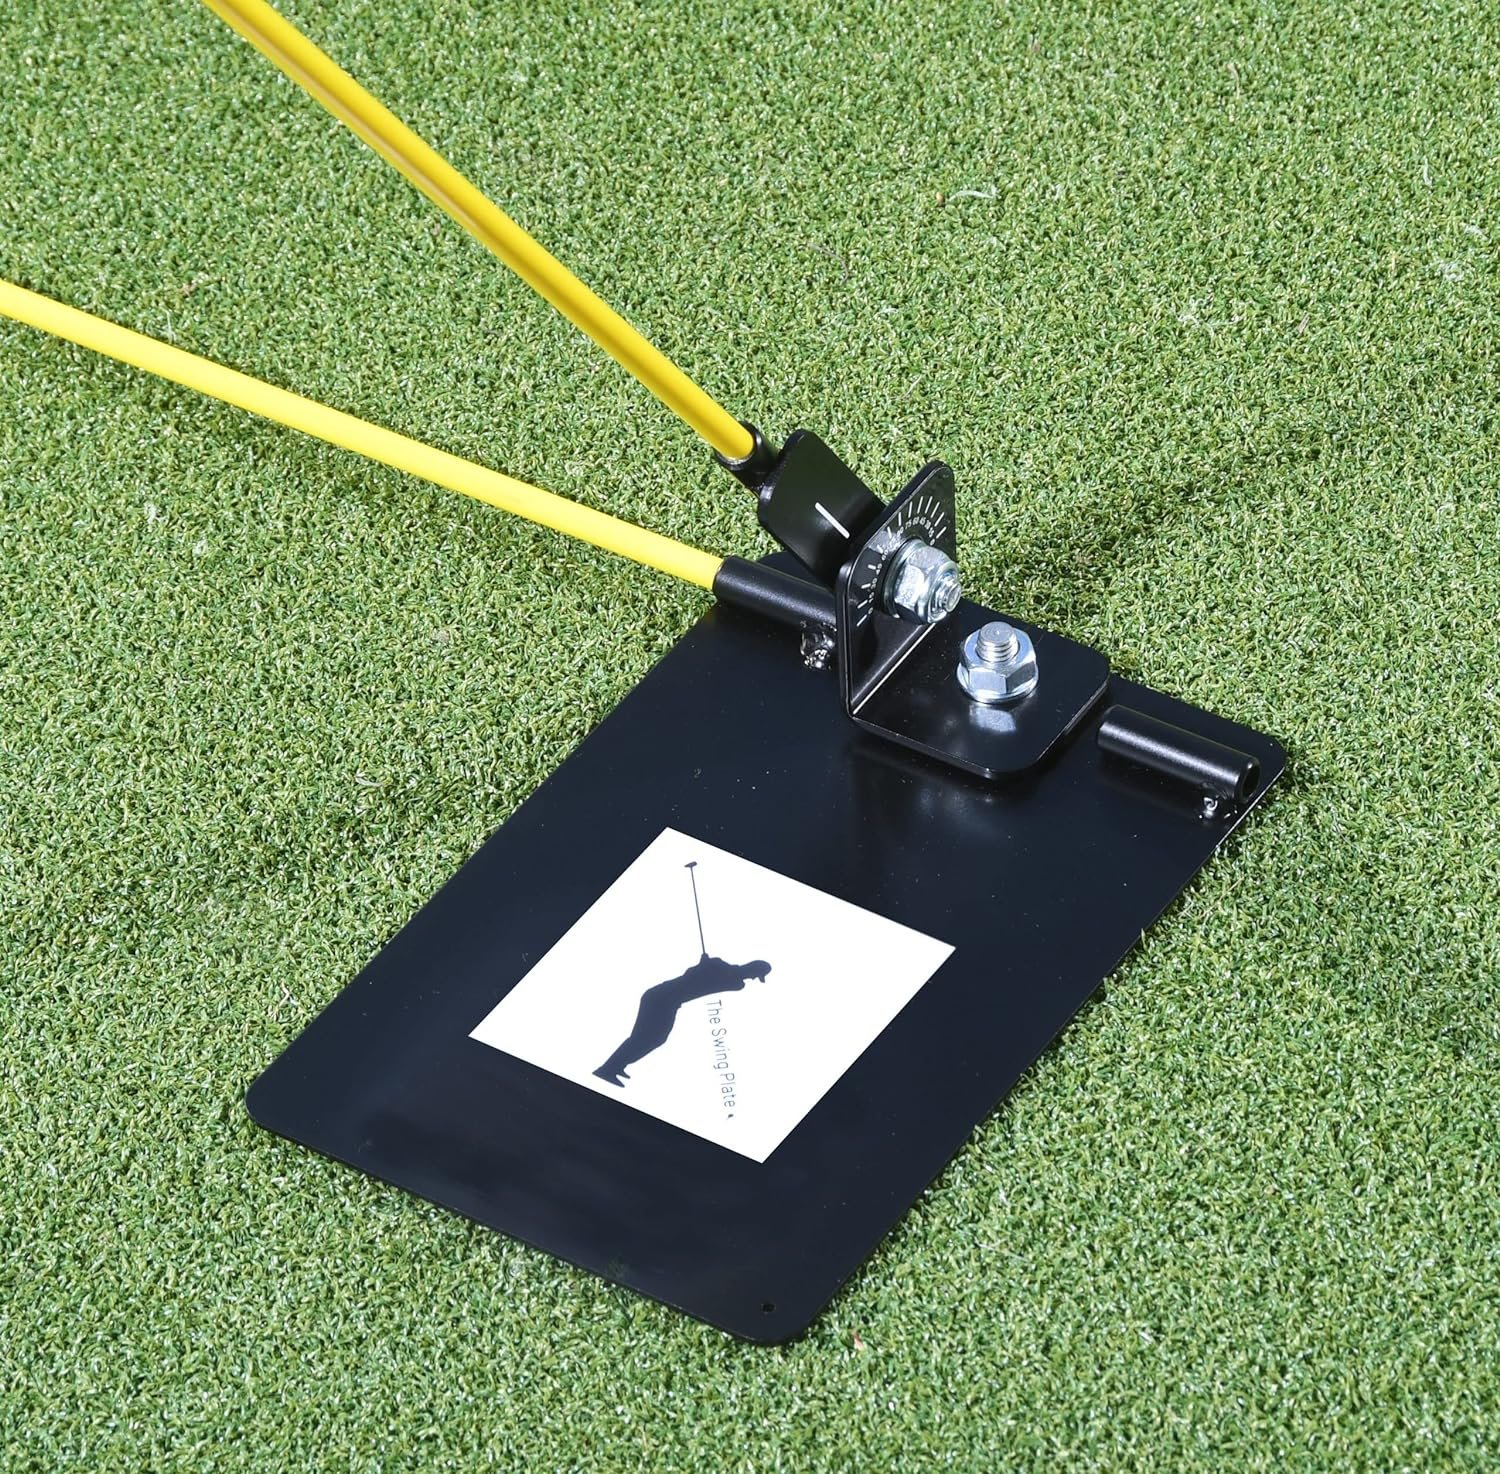 The Golf Swing Plate with 2 Alignment Sticks - Golf Swing Plane Training Aid - InTheHoleGolf